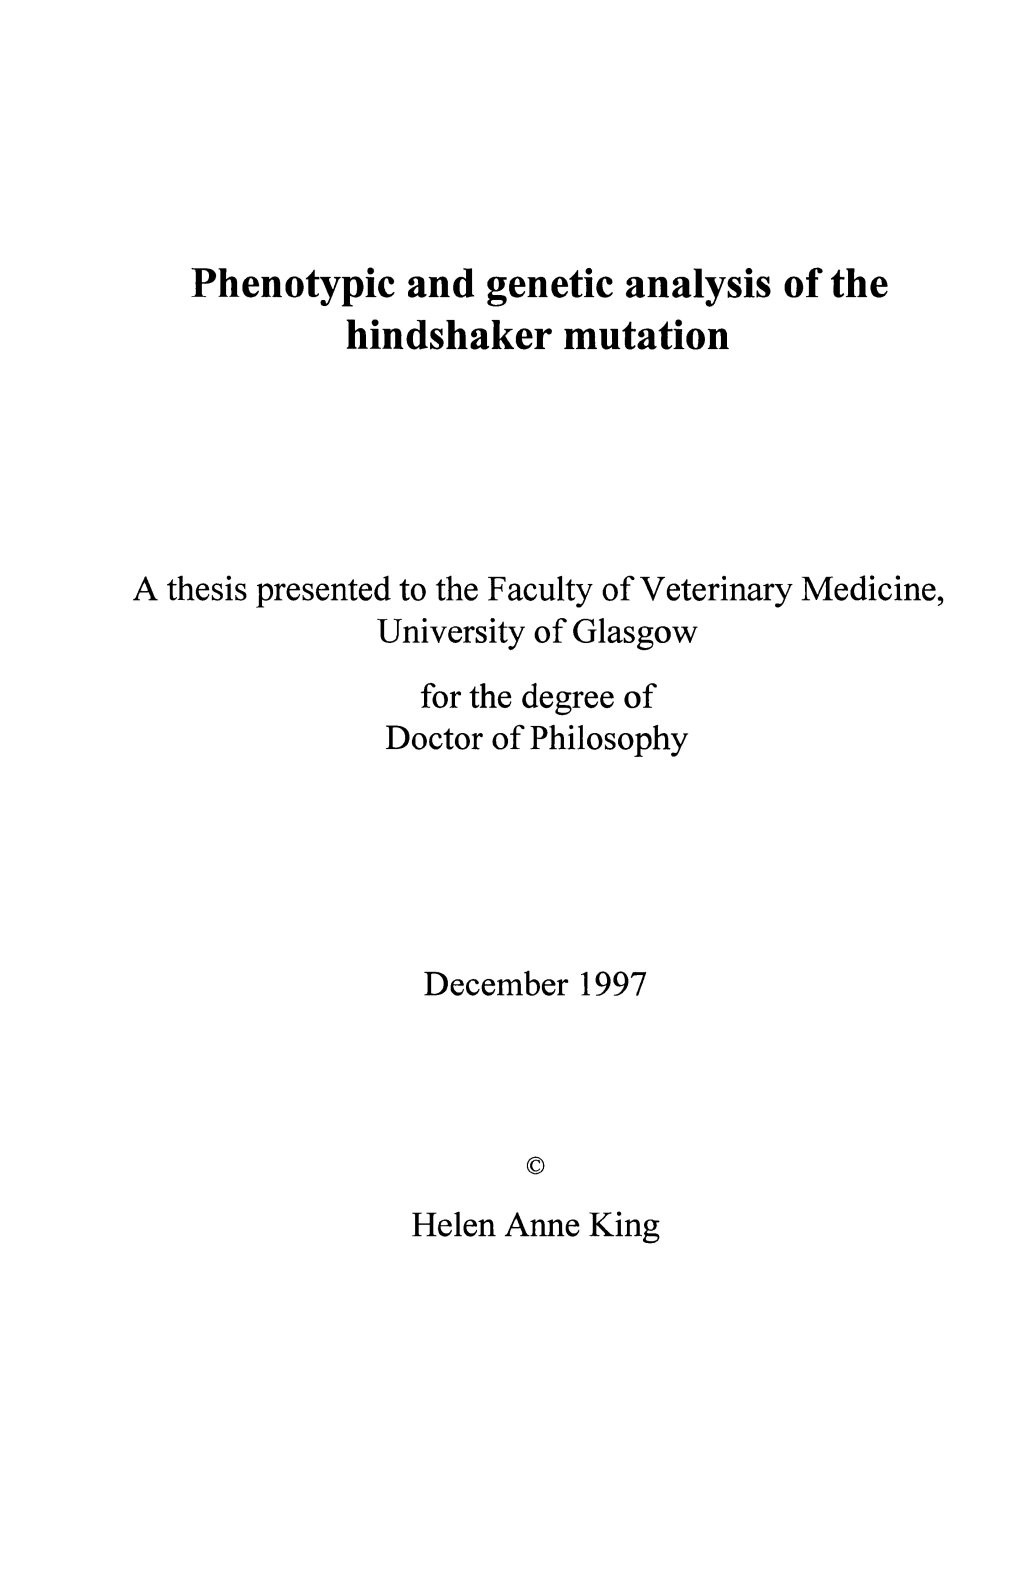 Phenotypic and Genetic Analysis of the Hindshaker Mutation